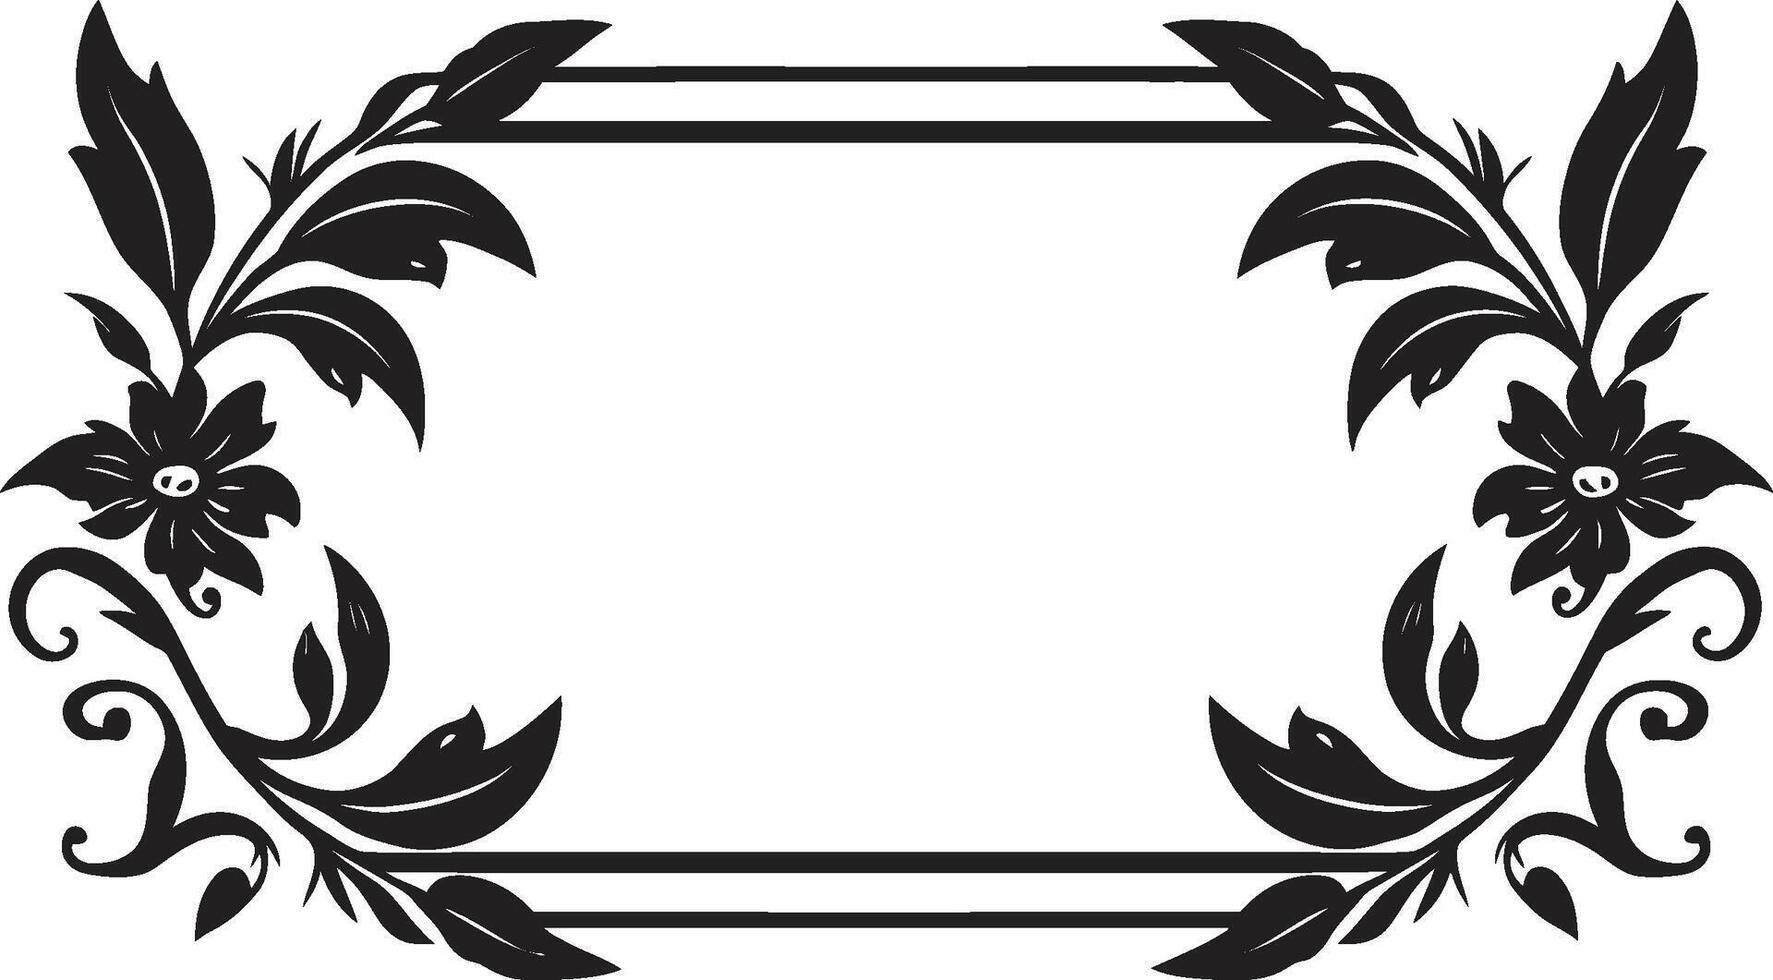 Noble Nostalgia Chic Vector Logo with Black Vintage European Border Aged Allure Monochrome Emblem Highlighting European Border Design